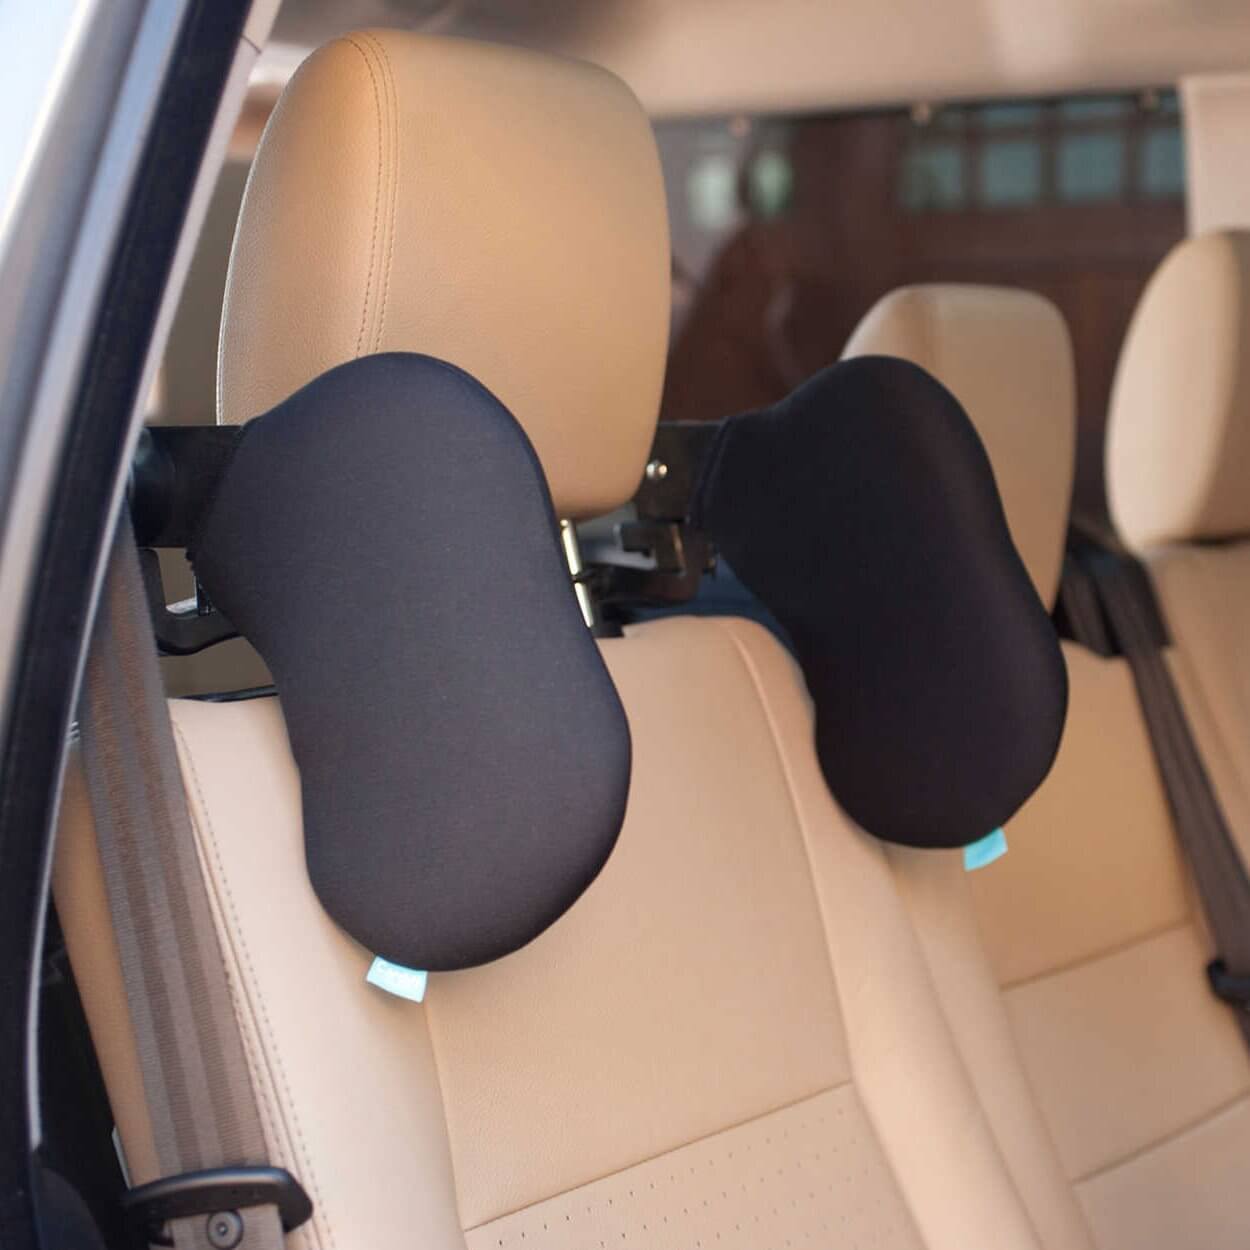 Car Seat Headrest Travel Neck Pillow Neck Safety Support